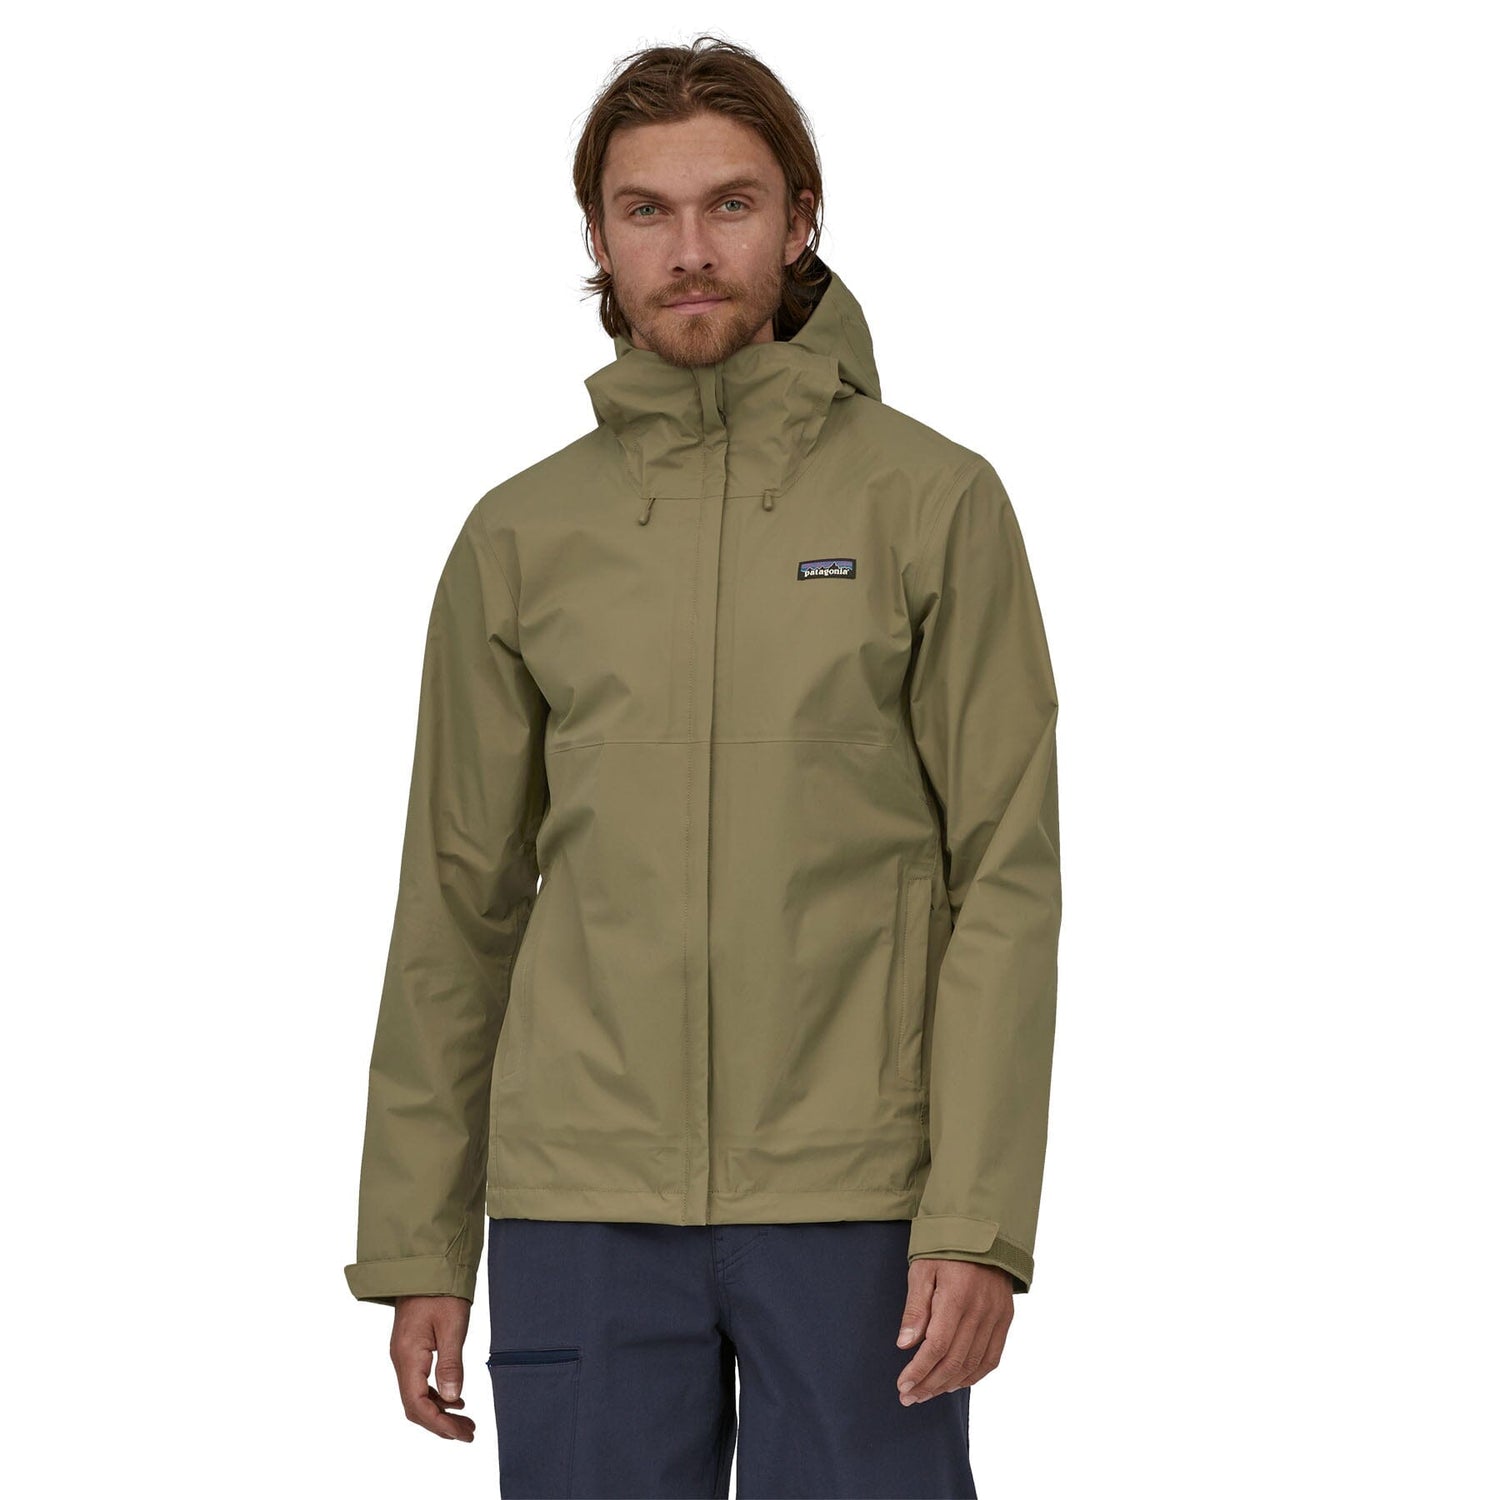 Patagonia - M's Torrentshell 3L Jacket - 100% Recycled Nylon - Weekendbee - sustainable sportswear